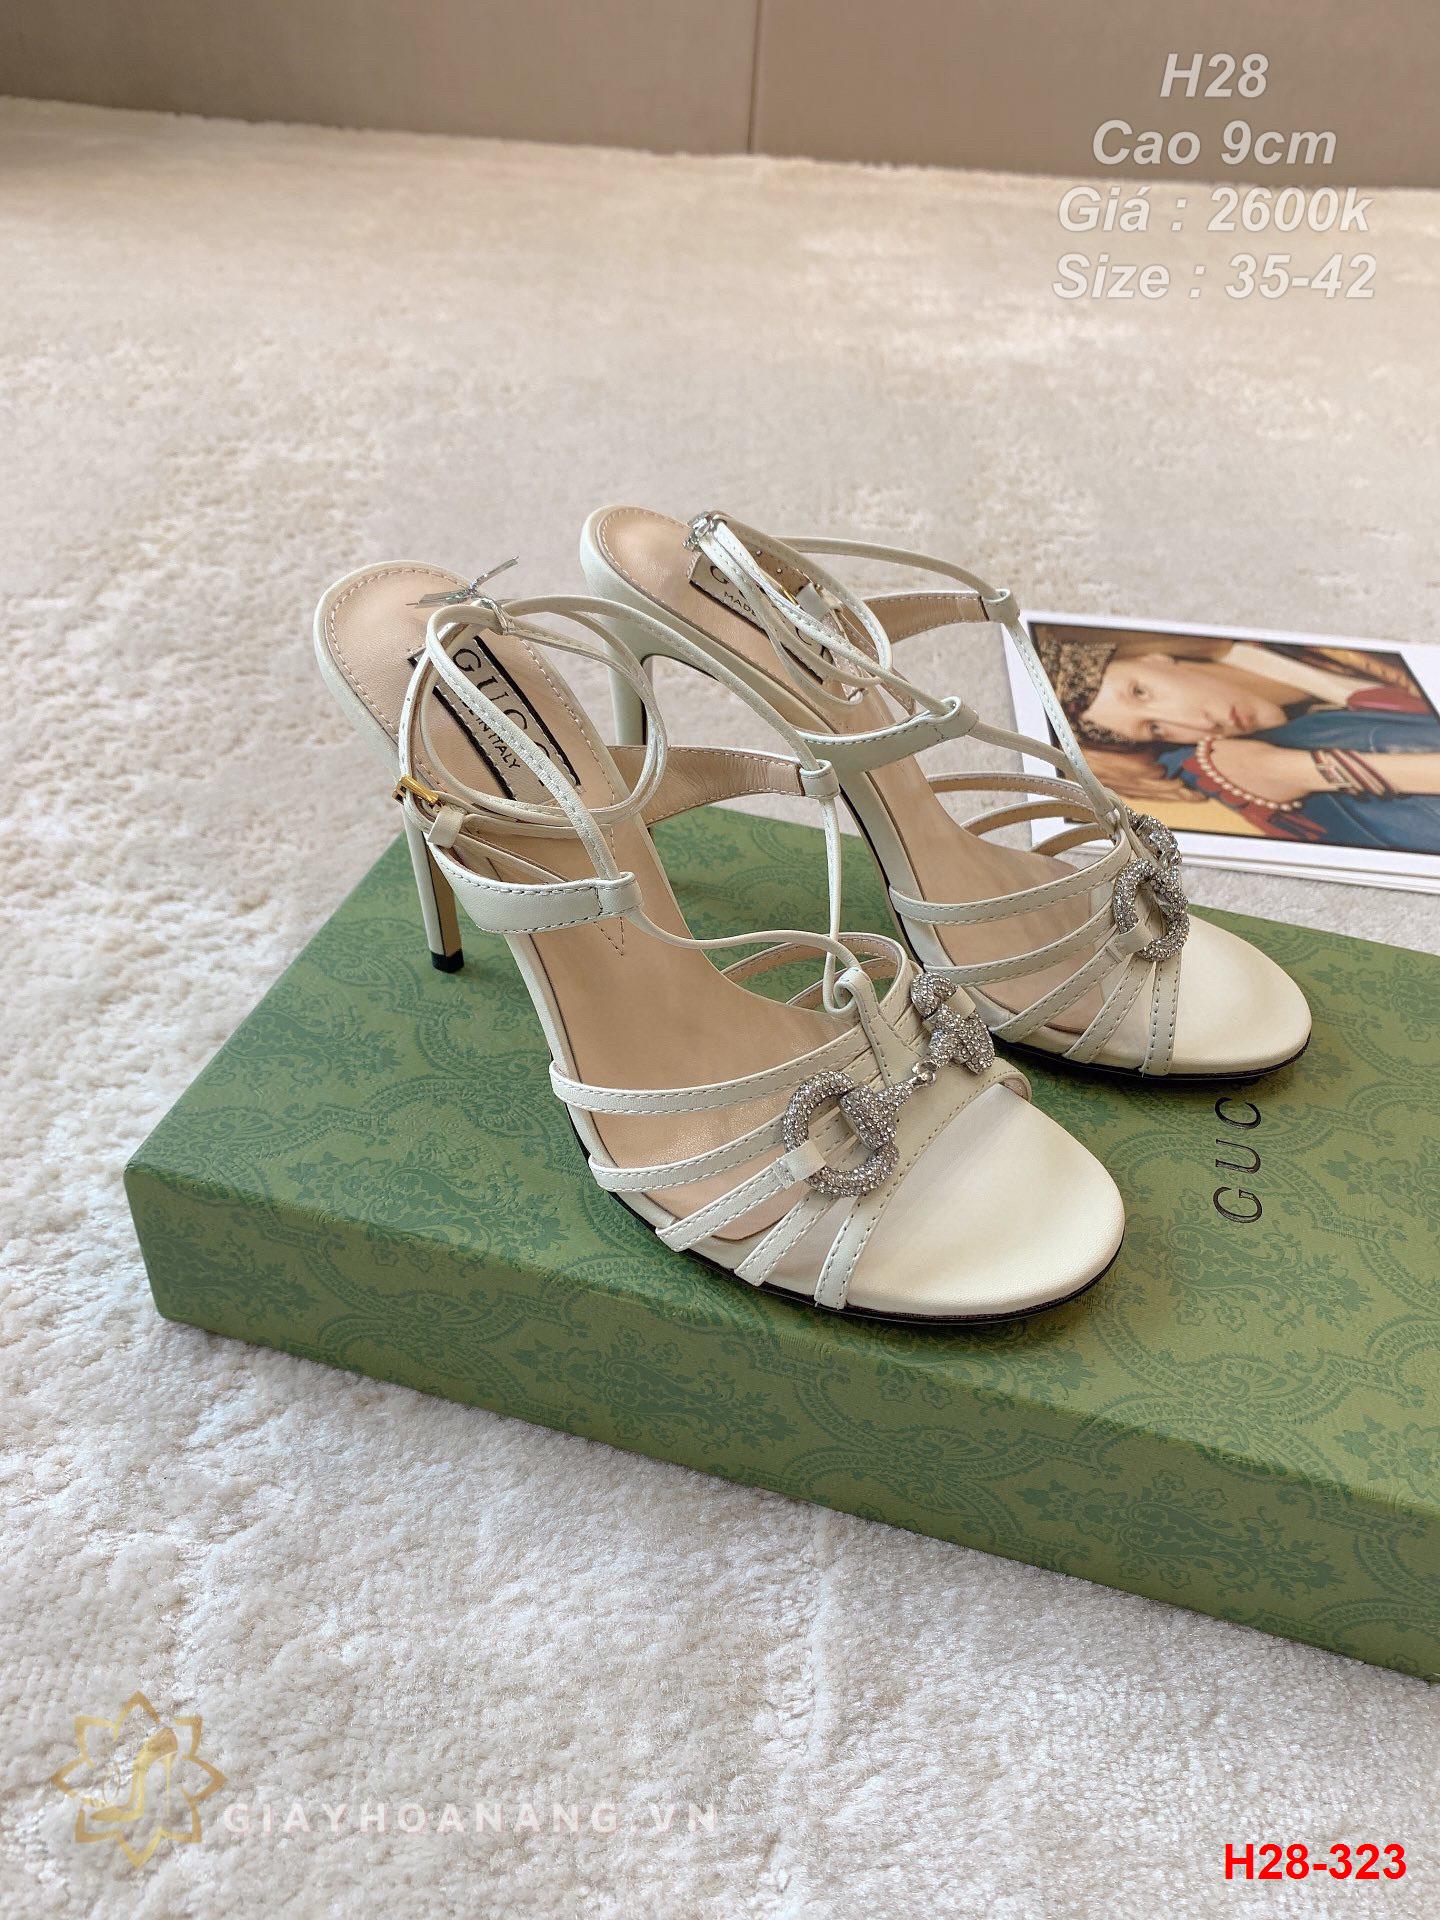 H28-323 Gucci sandal cao 9cm siêu cấp